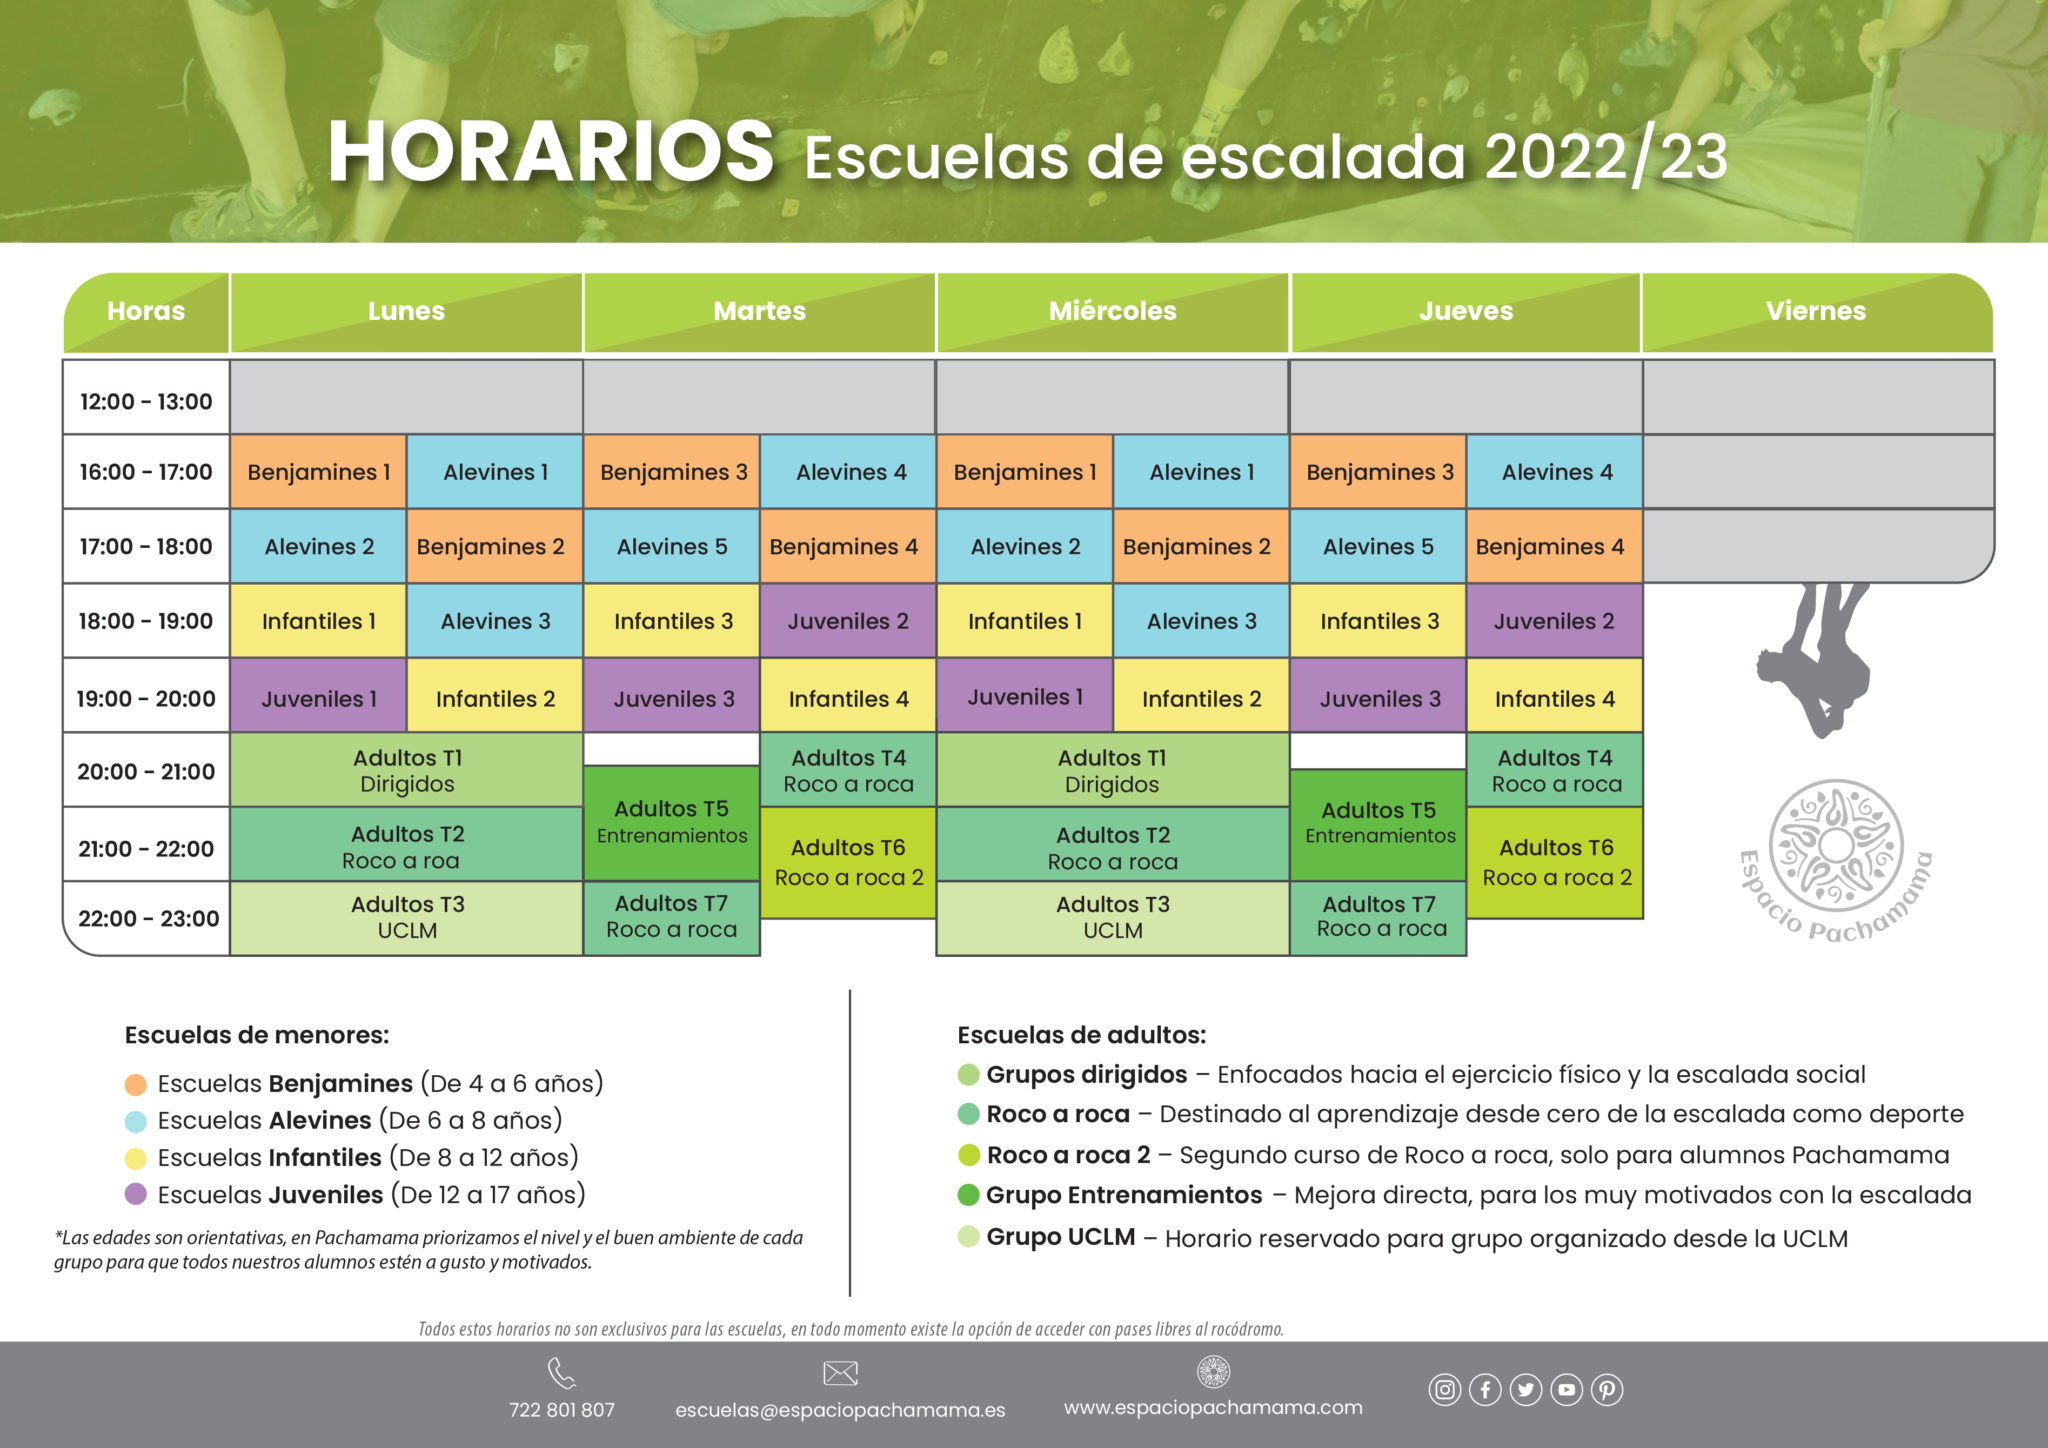 Horarios escuelas escalada Pachamama 2022/23